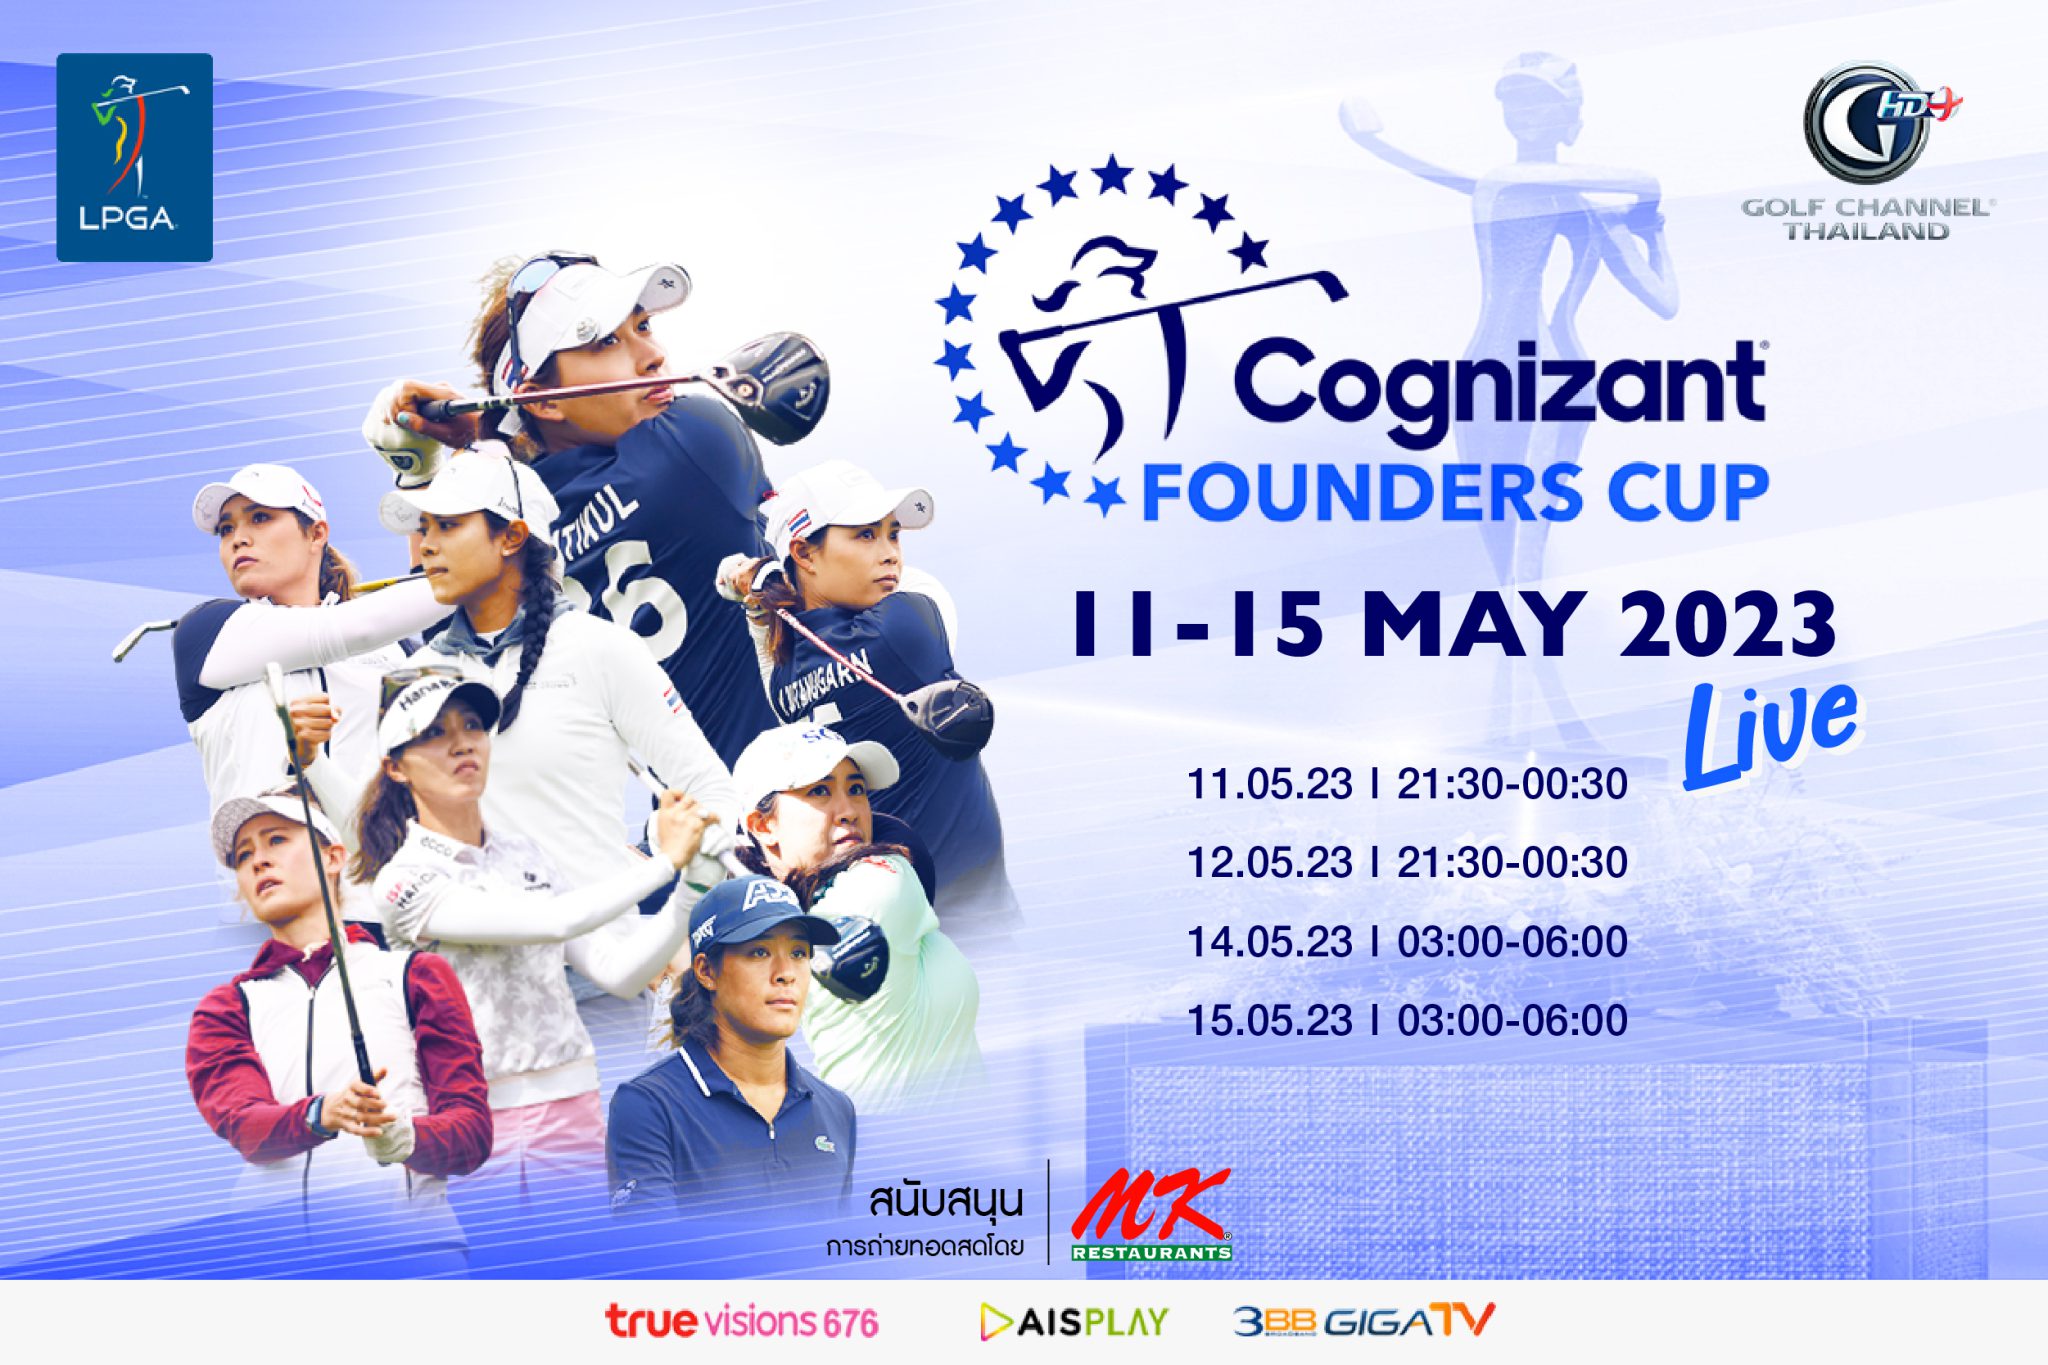 2023 LPGA Tour Cognizant Founders Cup Golf Channel Thailand